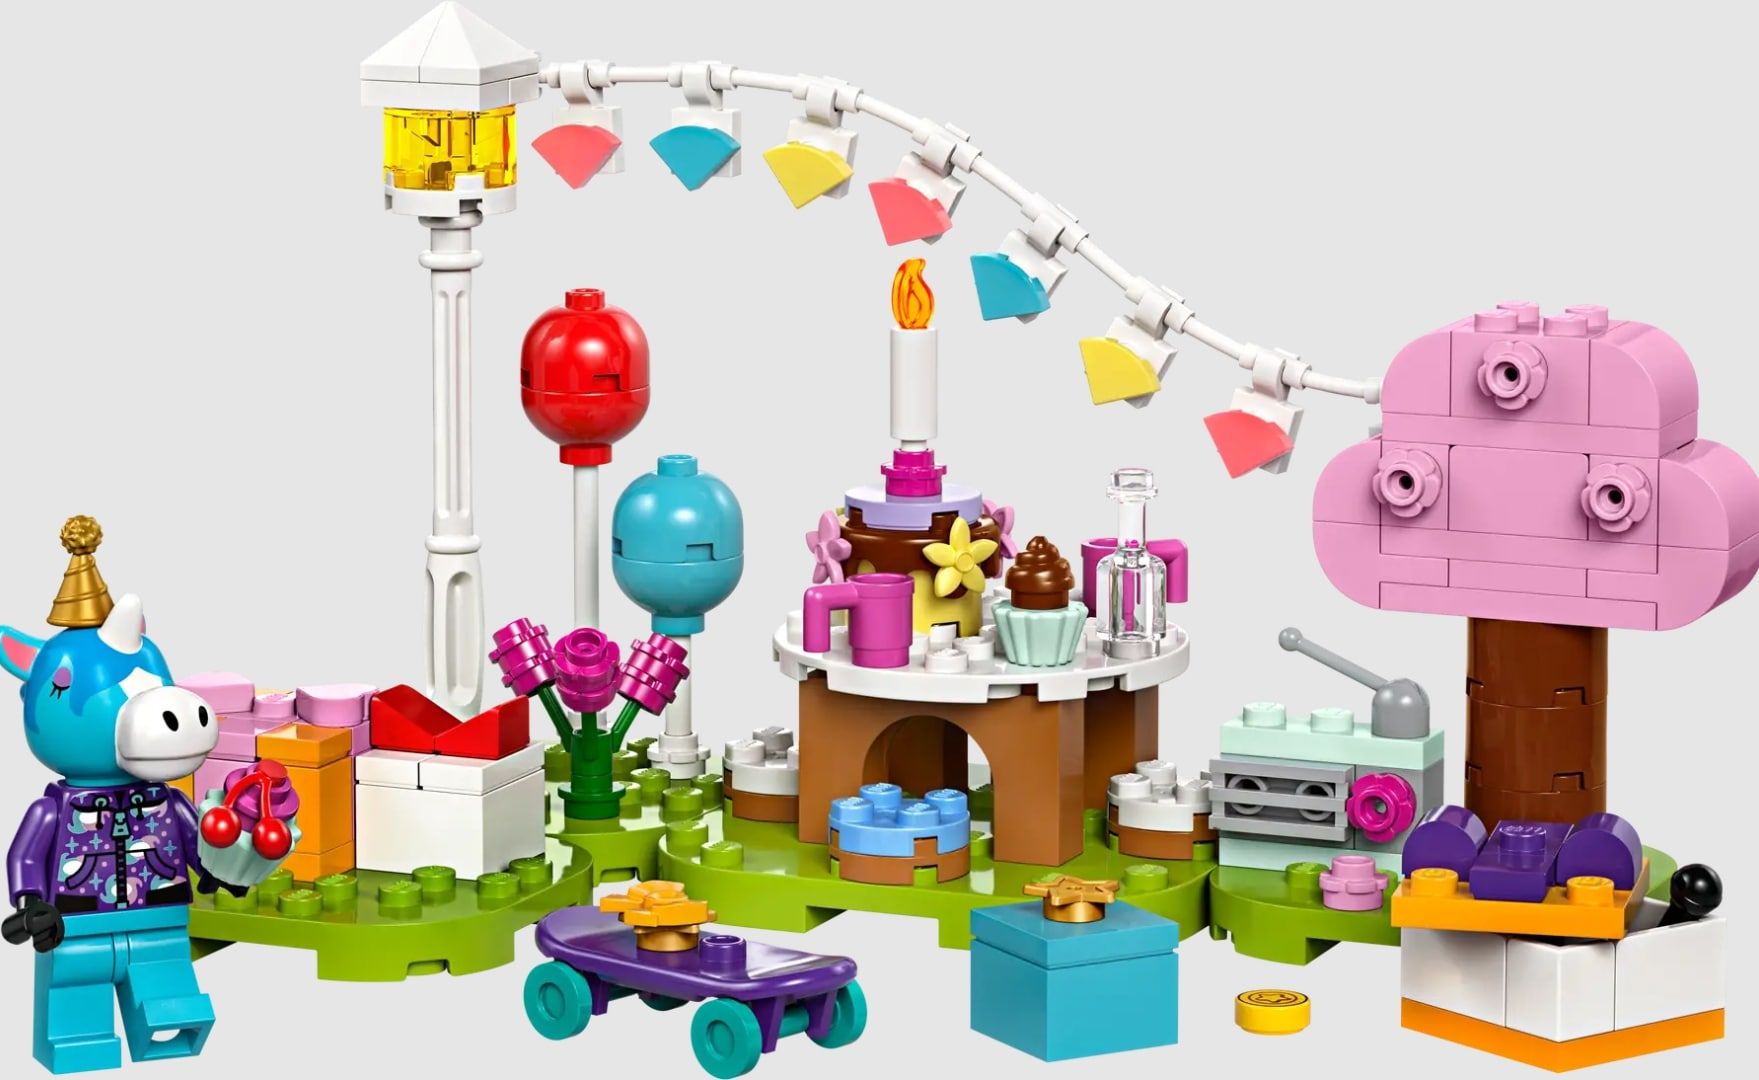 LEGO Animal Crossing Collaboration Confirmed